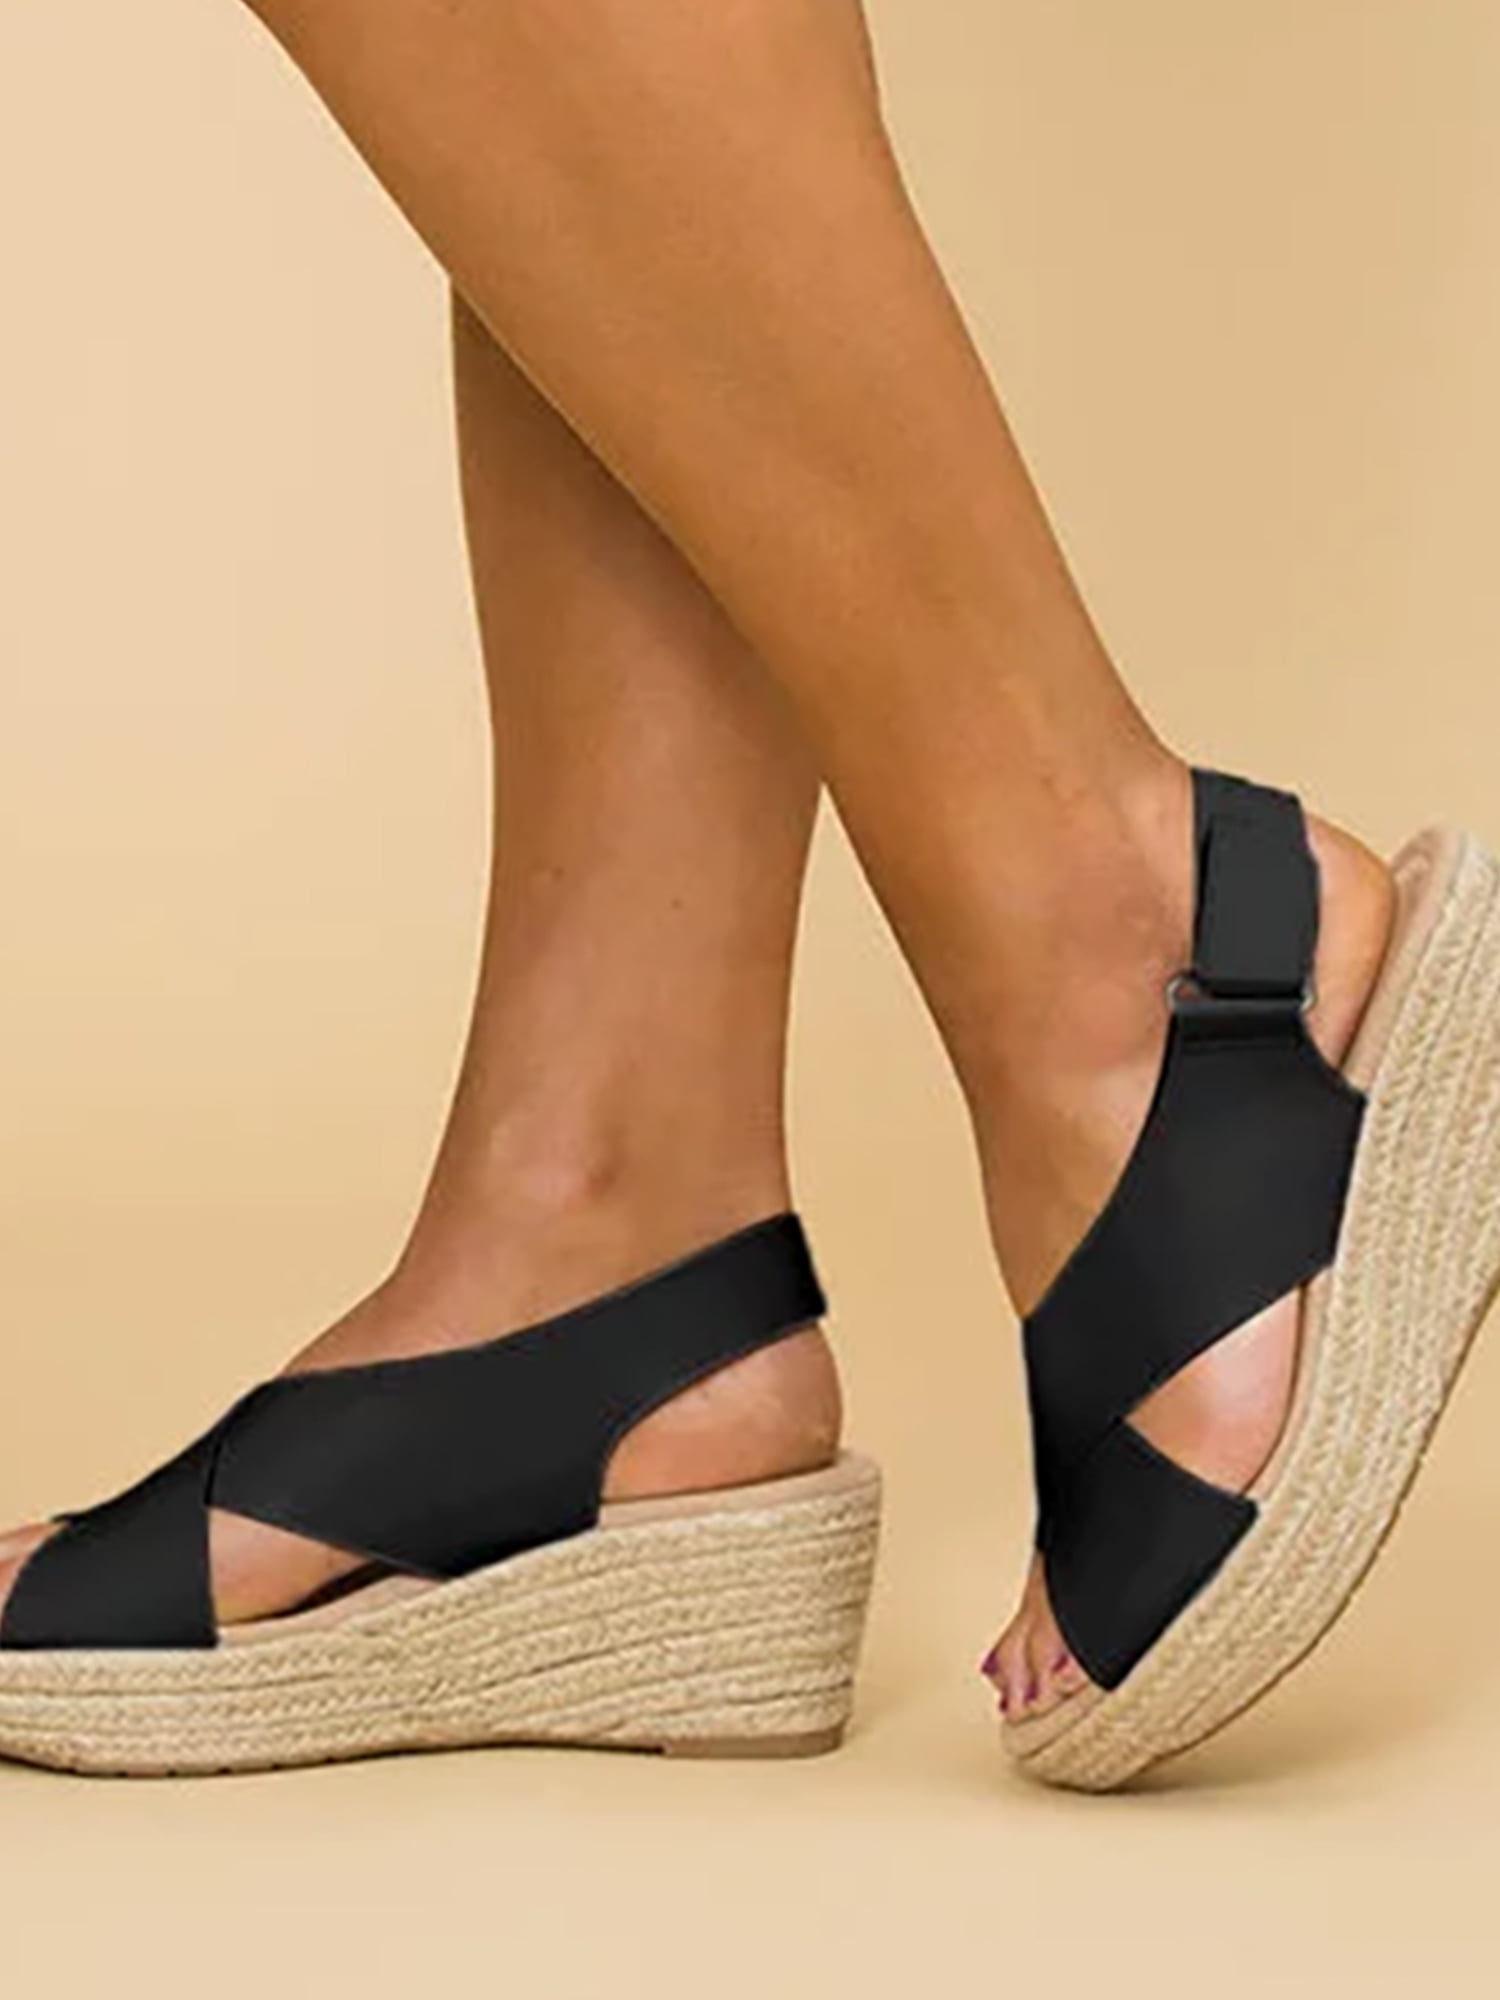 Wedge Sandals for Women Platform Cross Strappy Espadrille Sandal Open Toe Summer Beach Slingback Buckle Sandals 